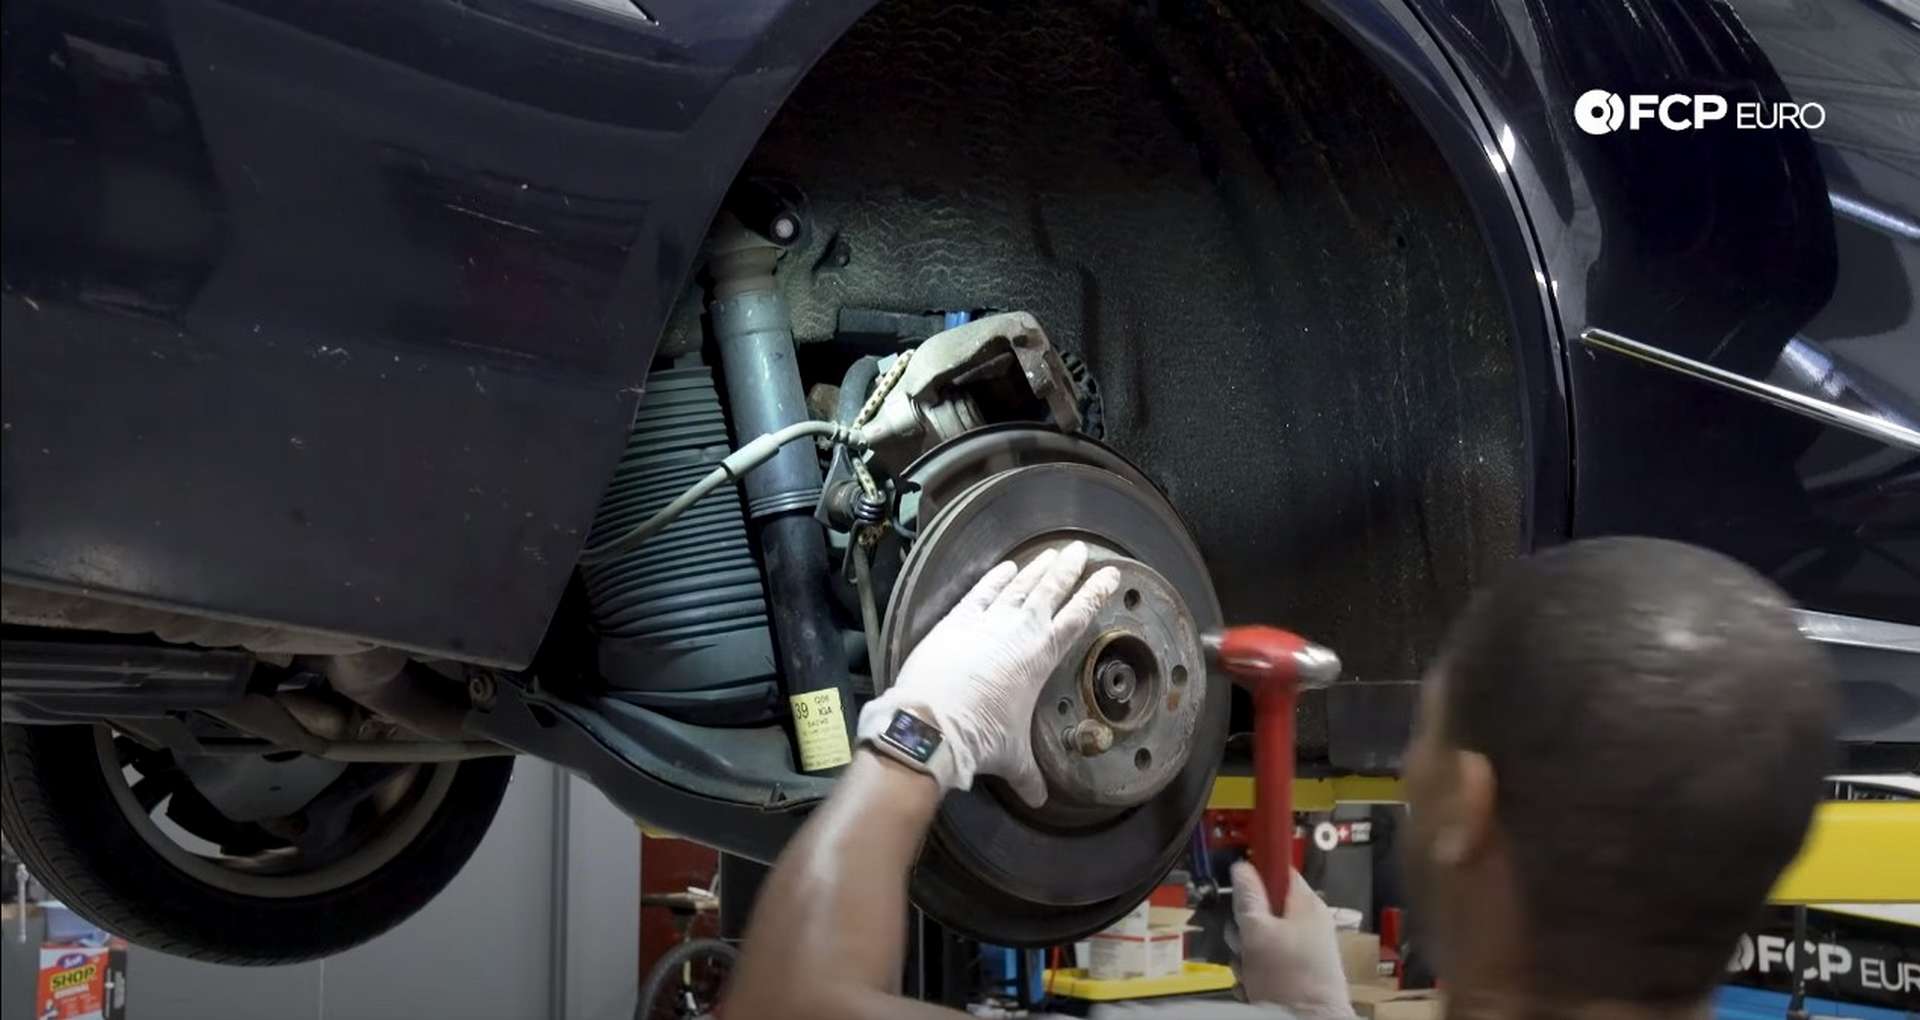 DIY Mercedes W211/212 Rear Brake Job hitting the rotor with a hammer